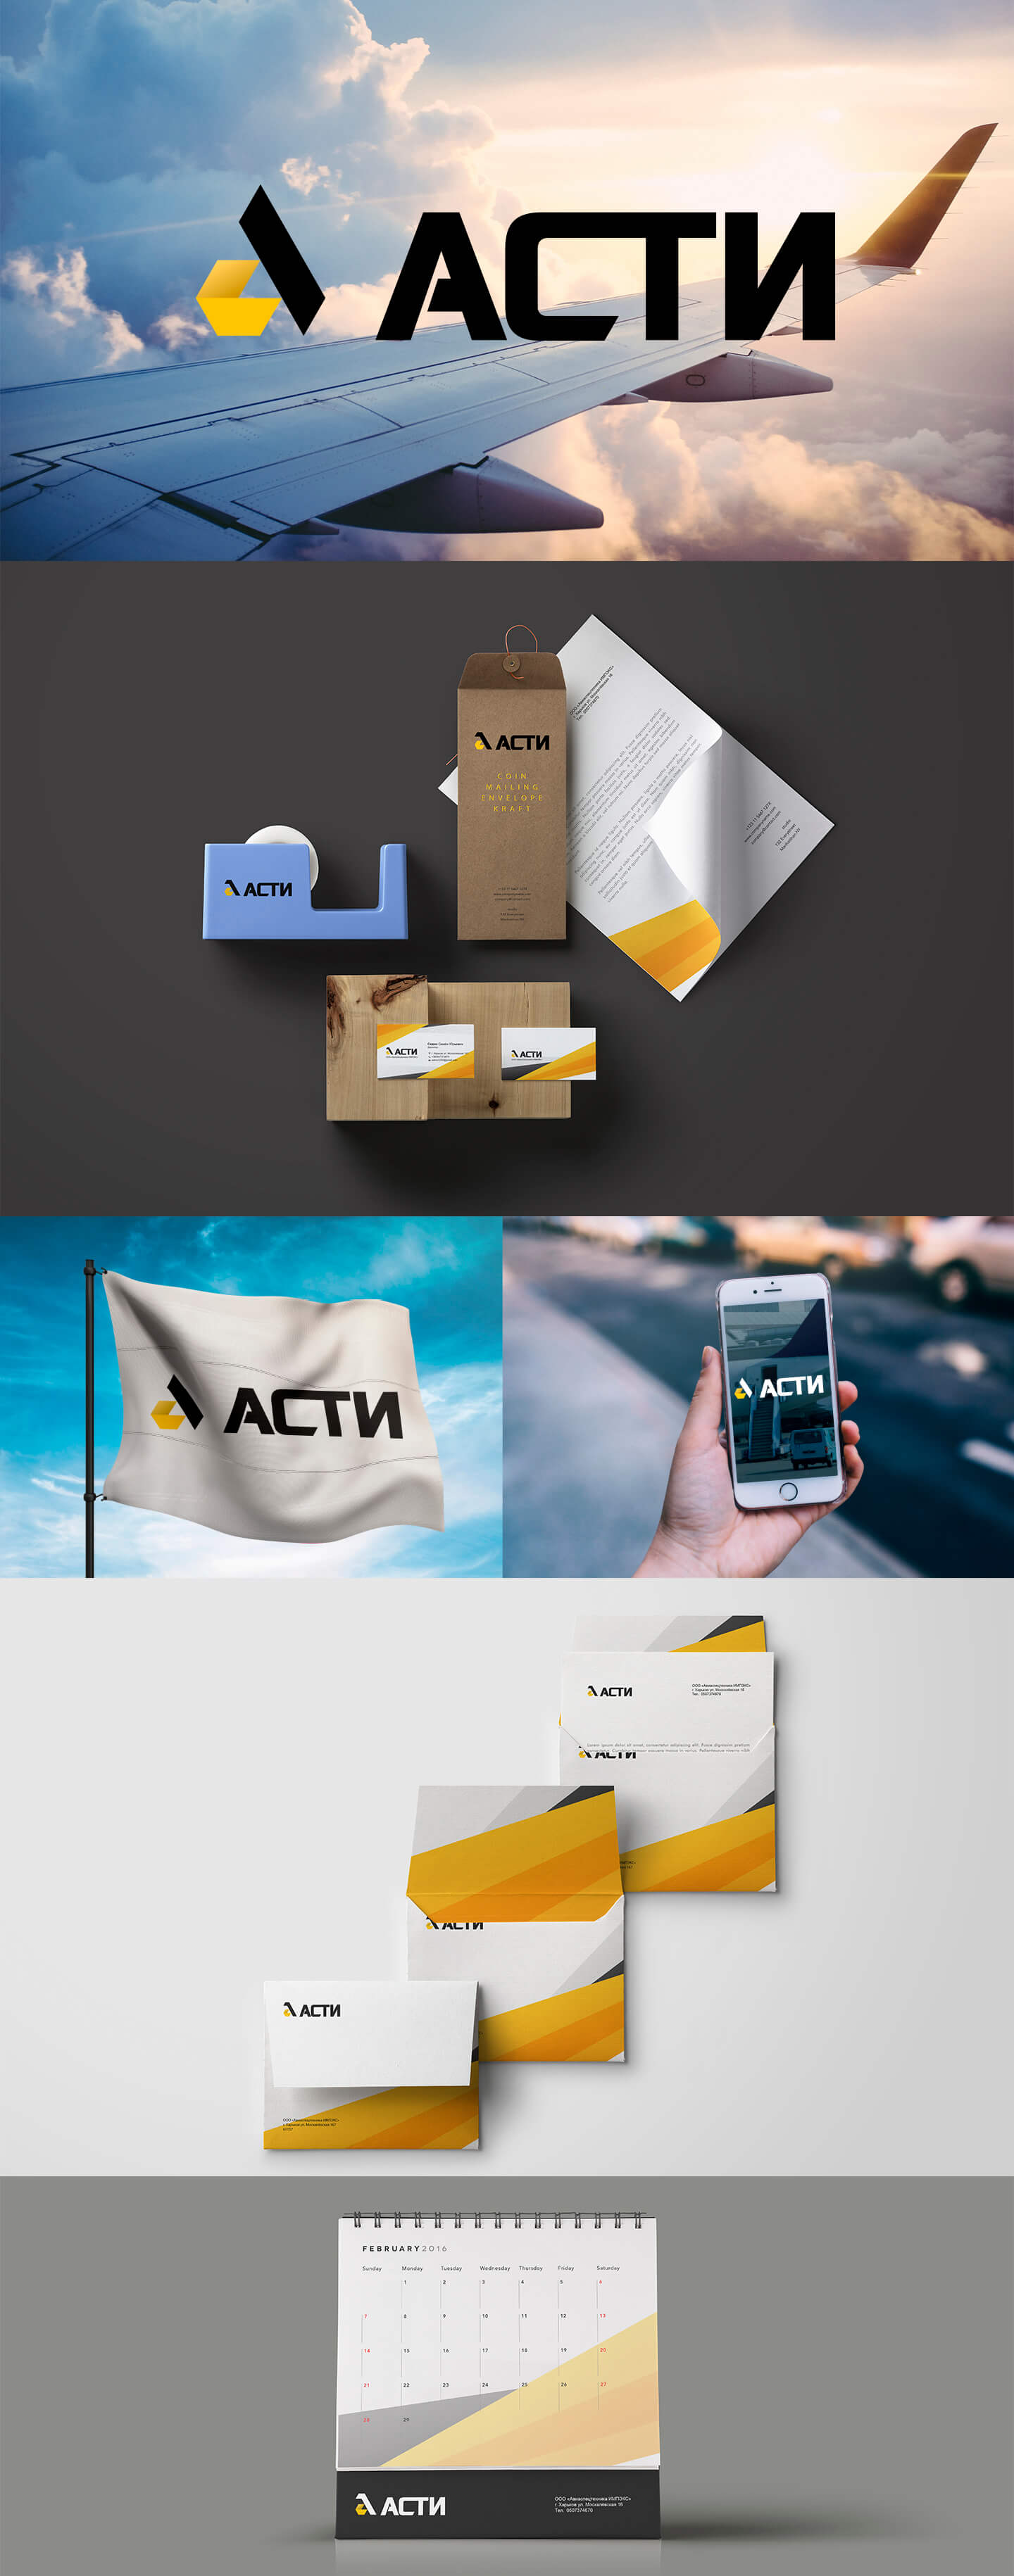 Создание логотипа для предприятия АСТИ